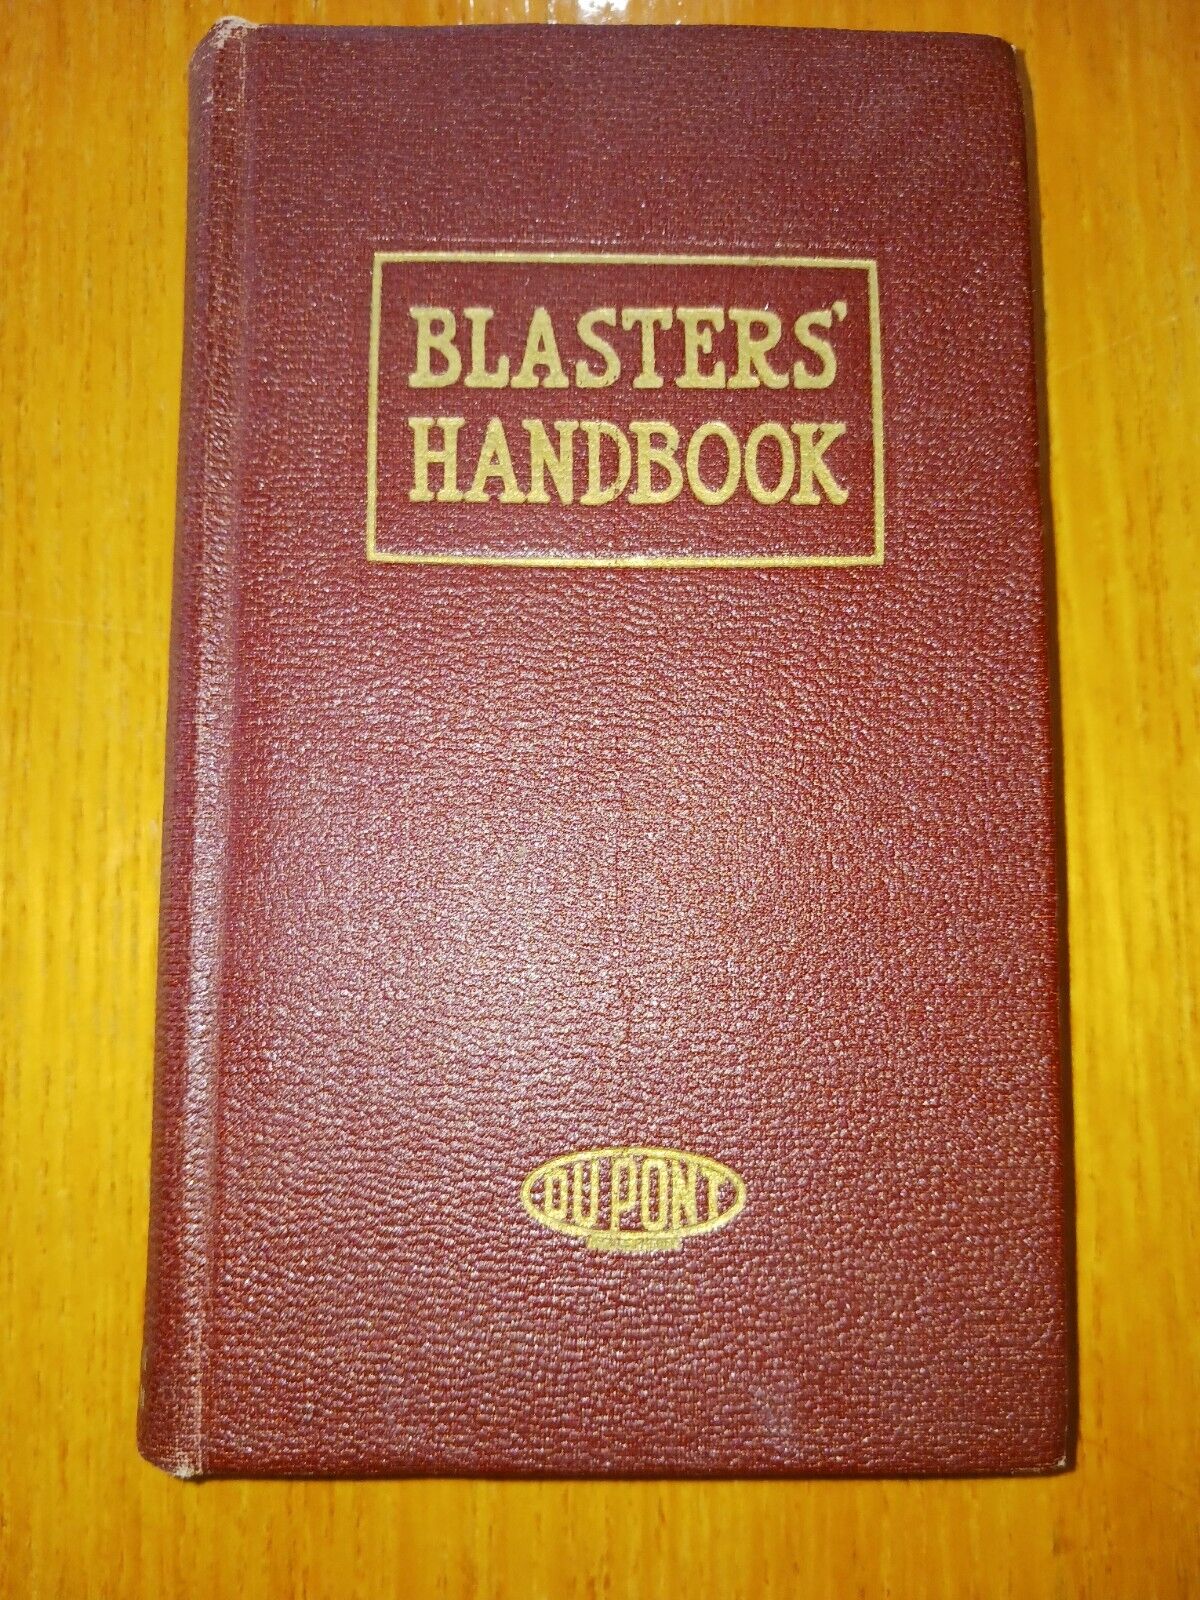 Blasters Handbook, 12th Edition 